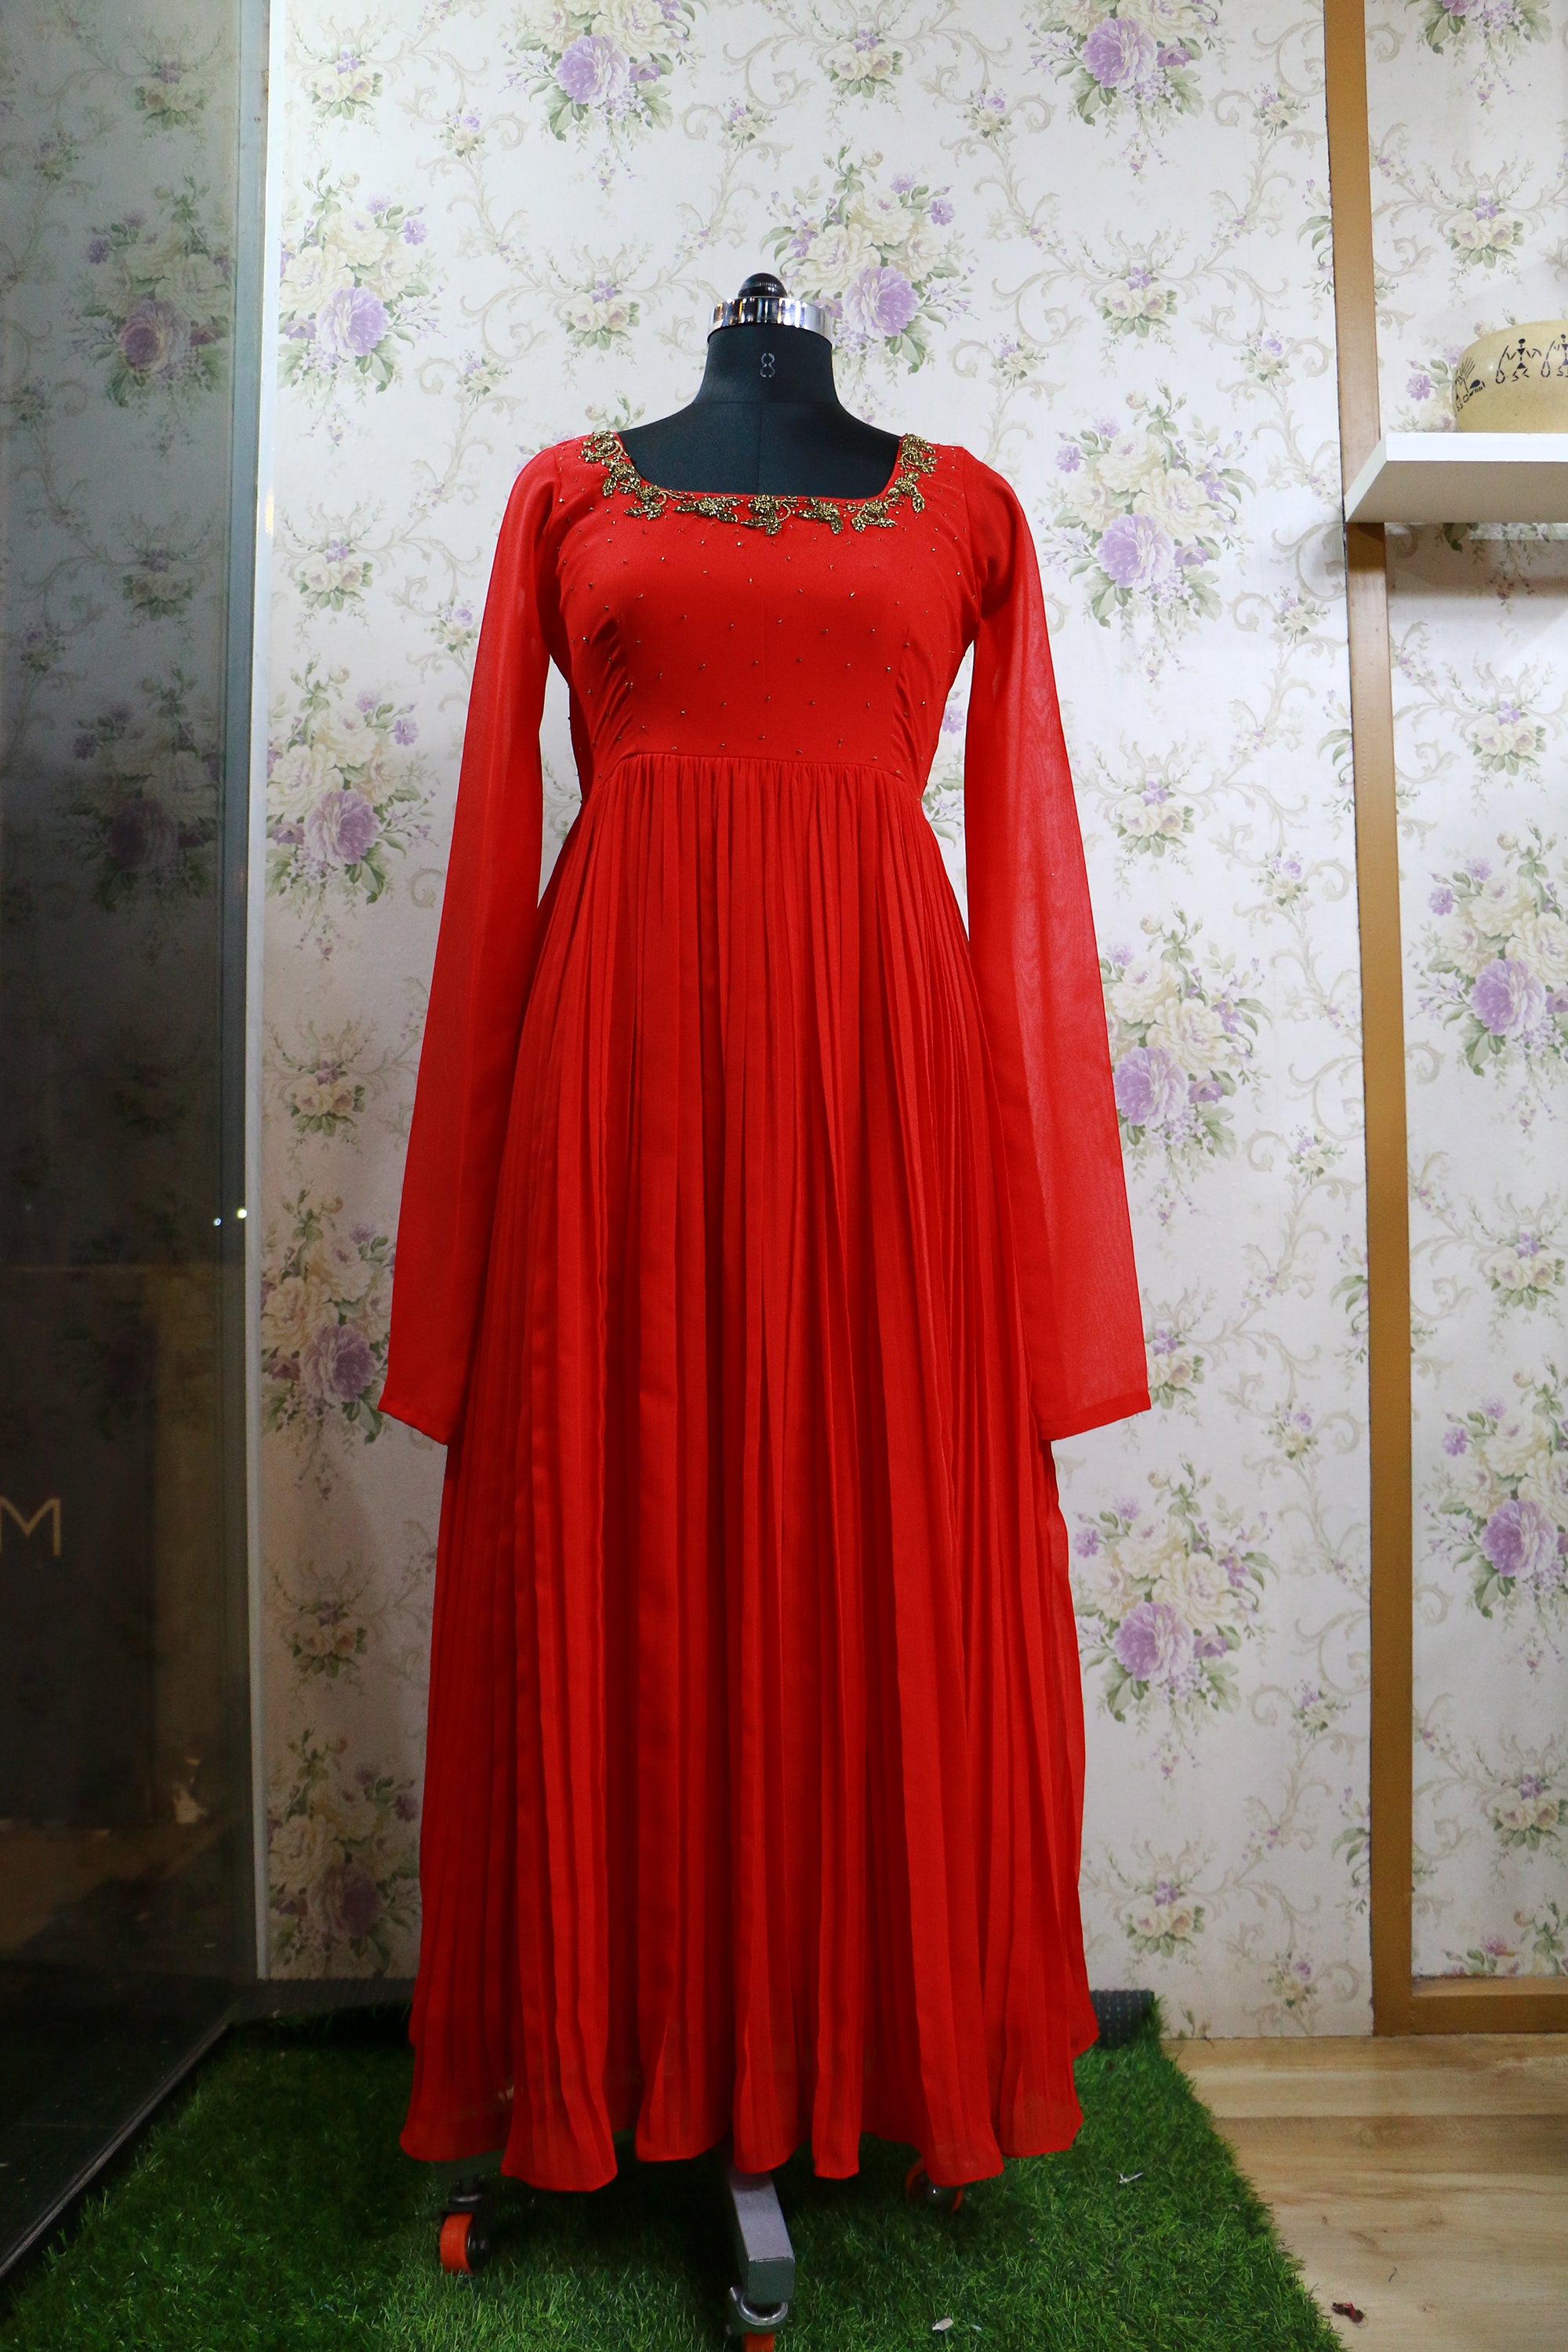 LUZON A-line dress in chiffon, lace, beads Wedding Dress by Pronovias